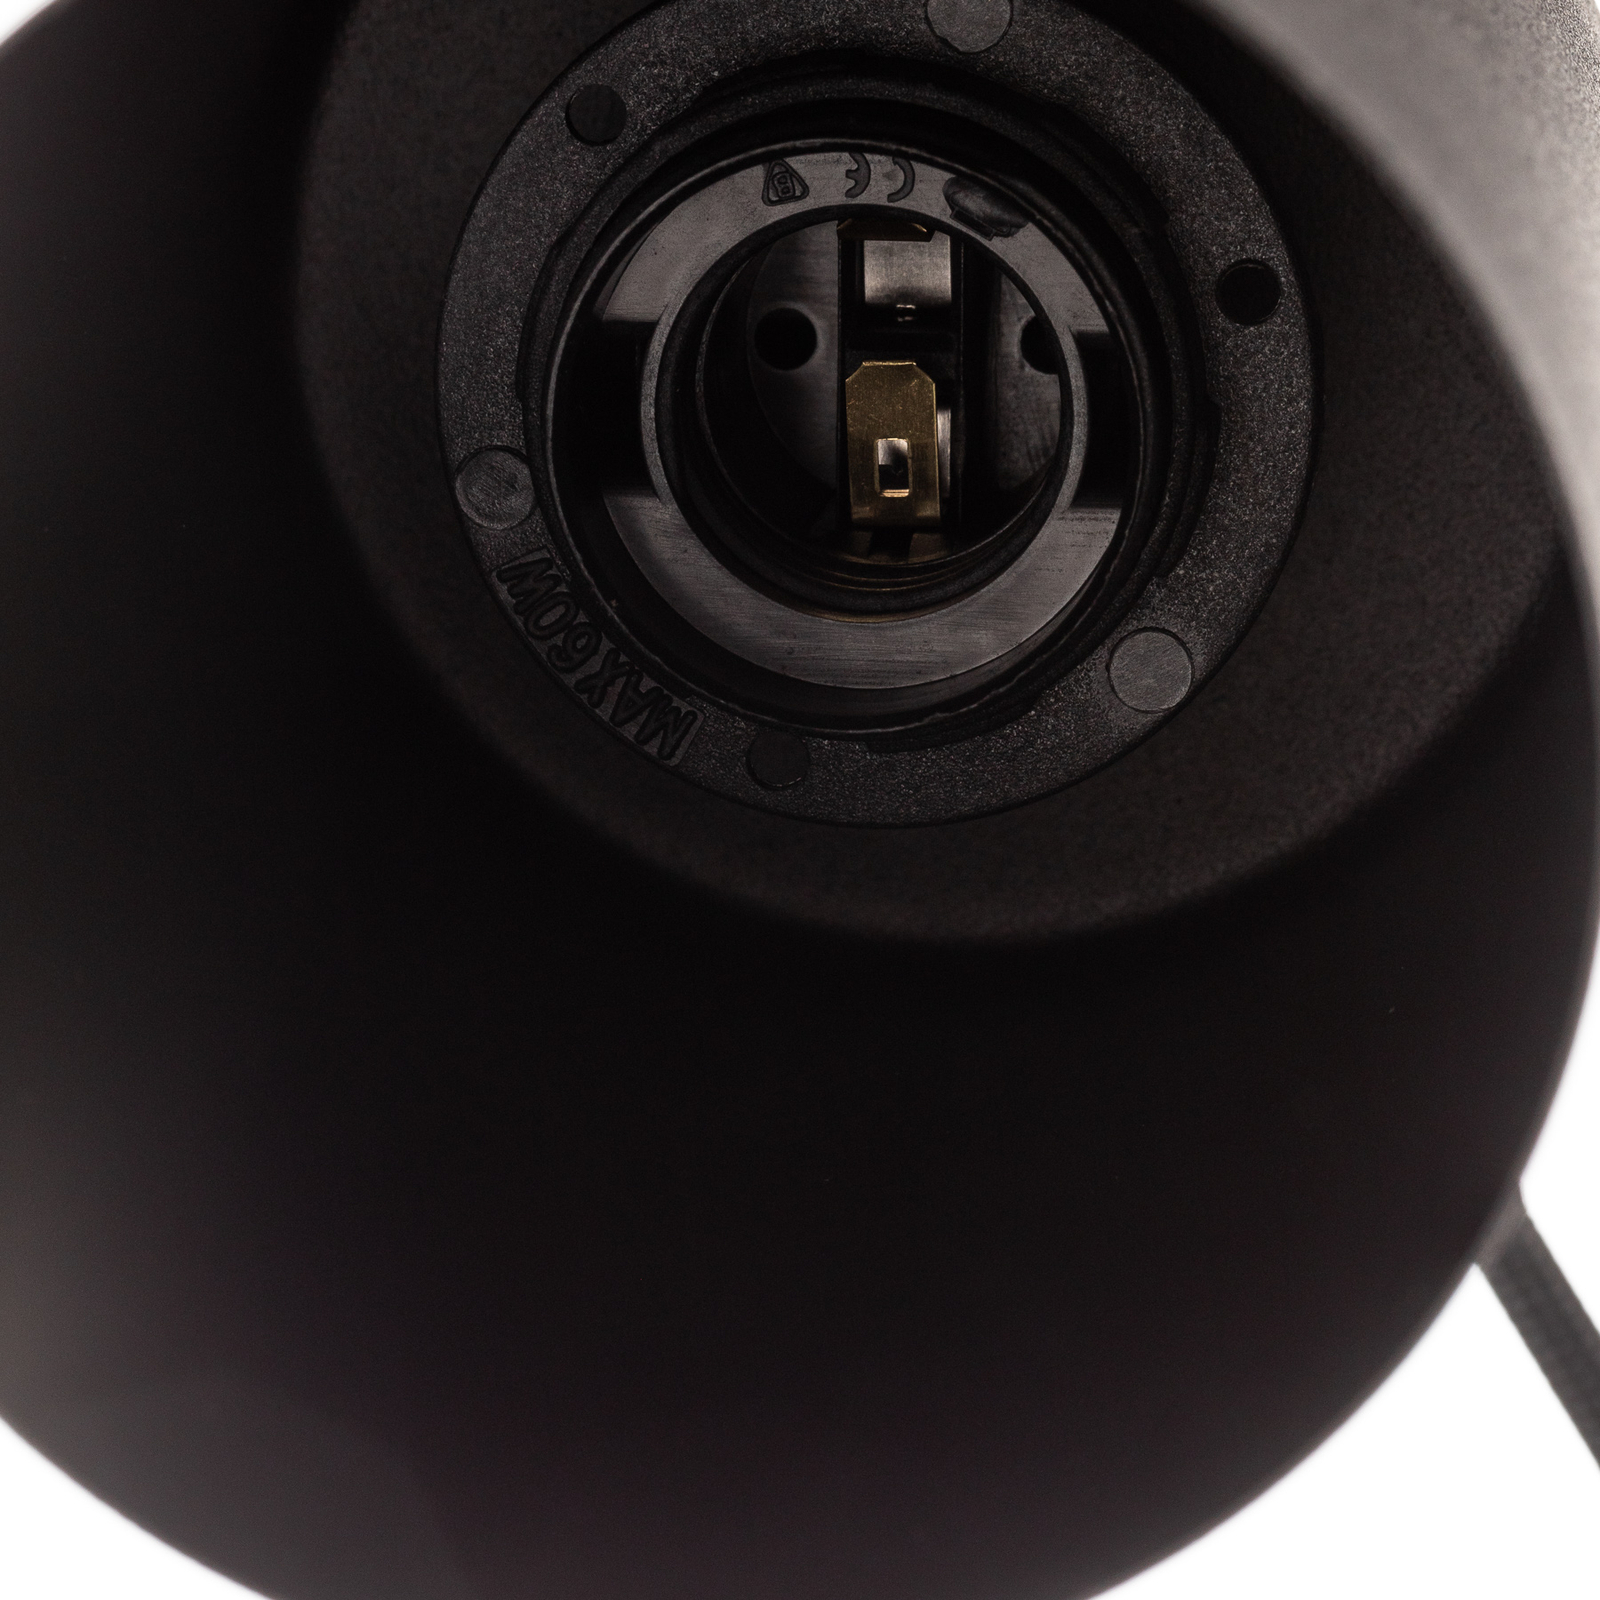 Lámpara colgante ZW Tube 170, 1 luz, negro